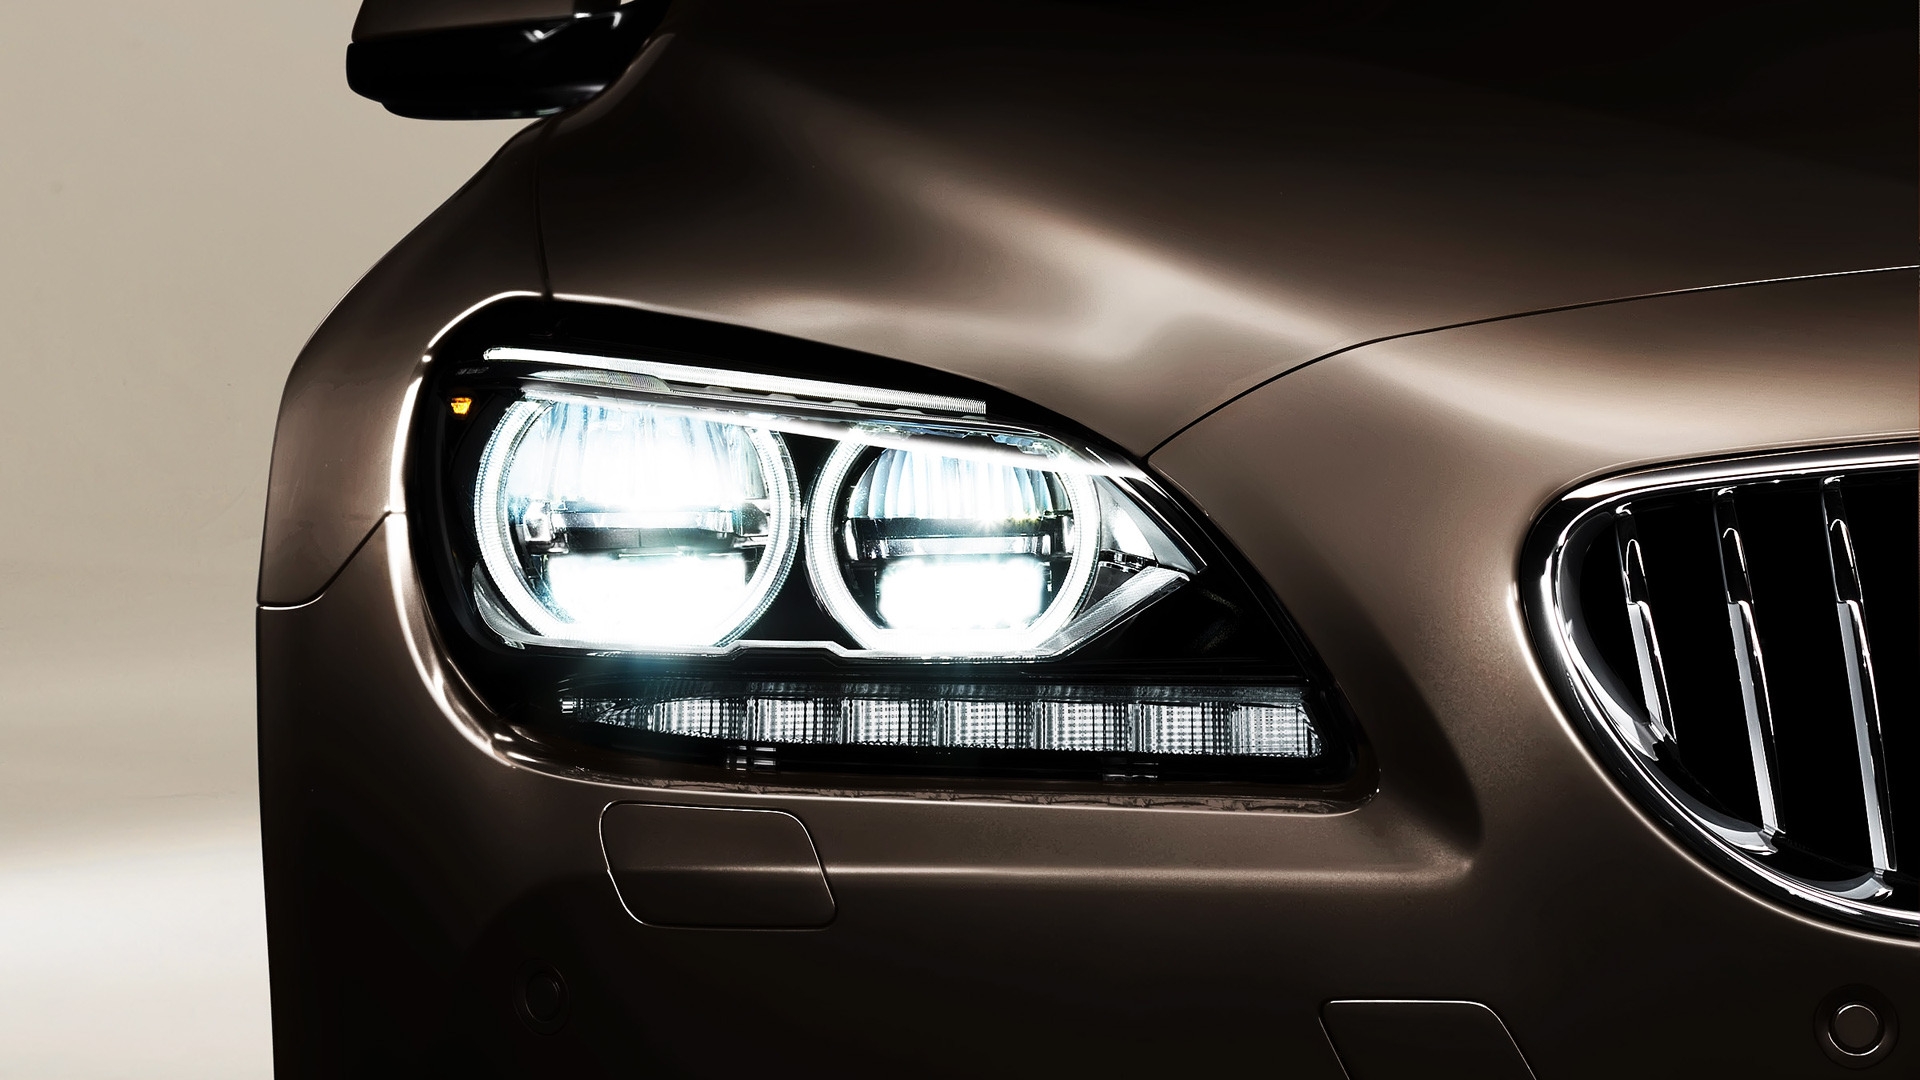 BMW 6 Series 2013 Headlight for 1920 x 1080 HDTV 1080p resolution